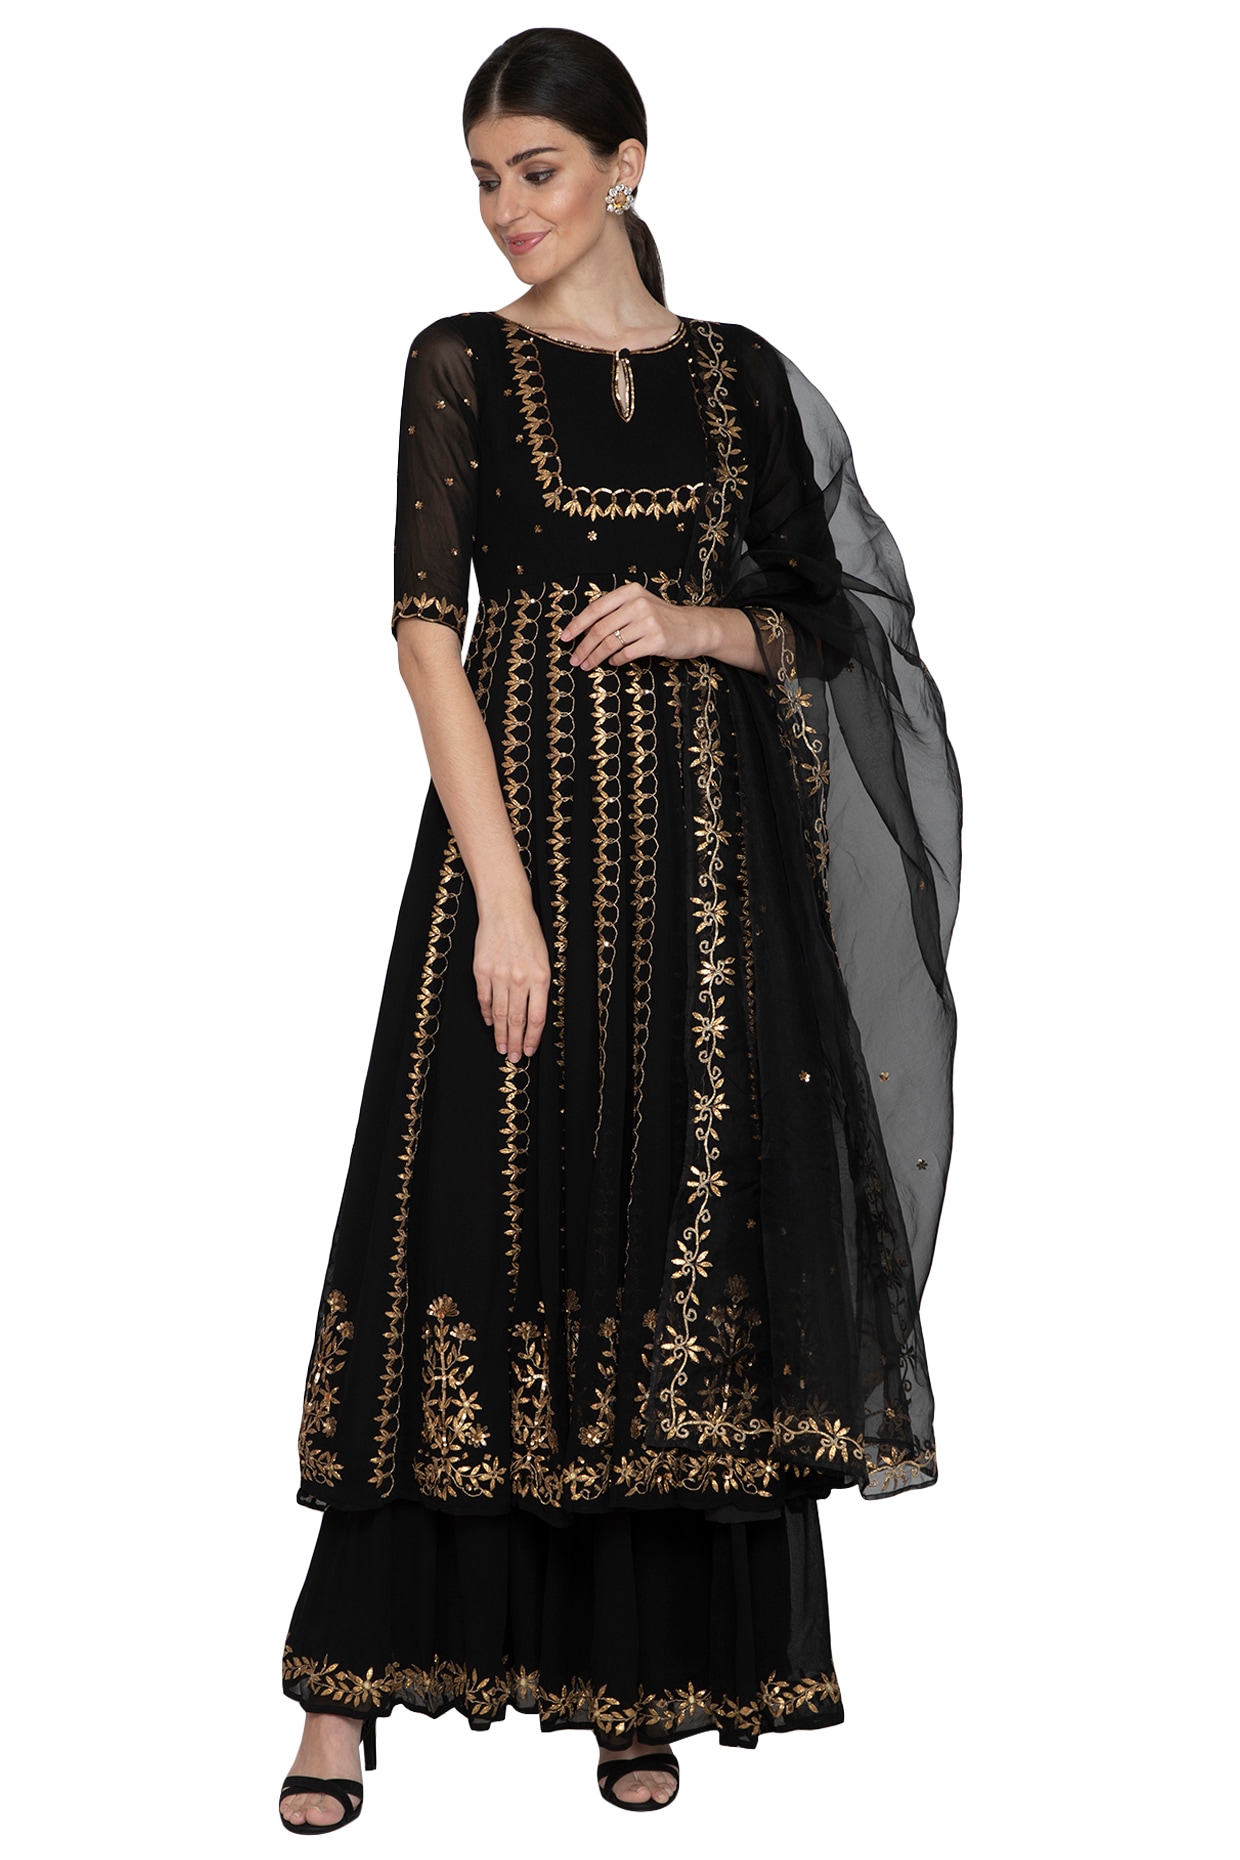 Georgette Black Anarkali Suit at Rs 1499 in Dehradun | ID: 25900118697